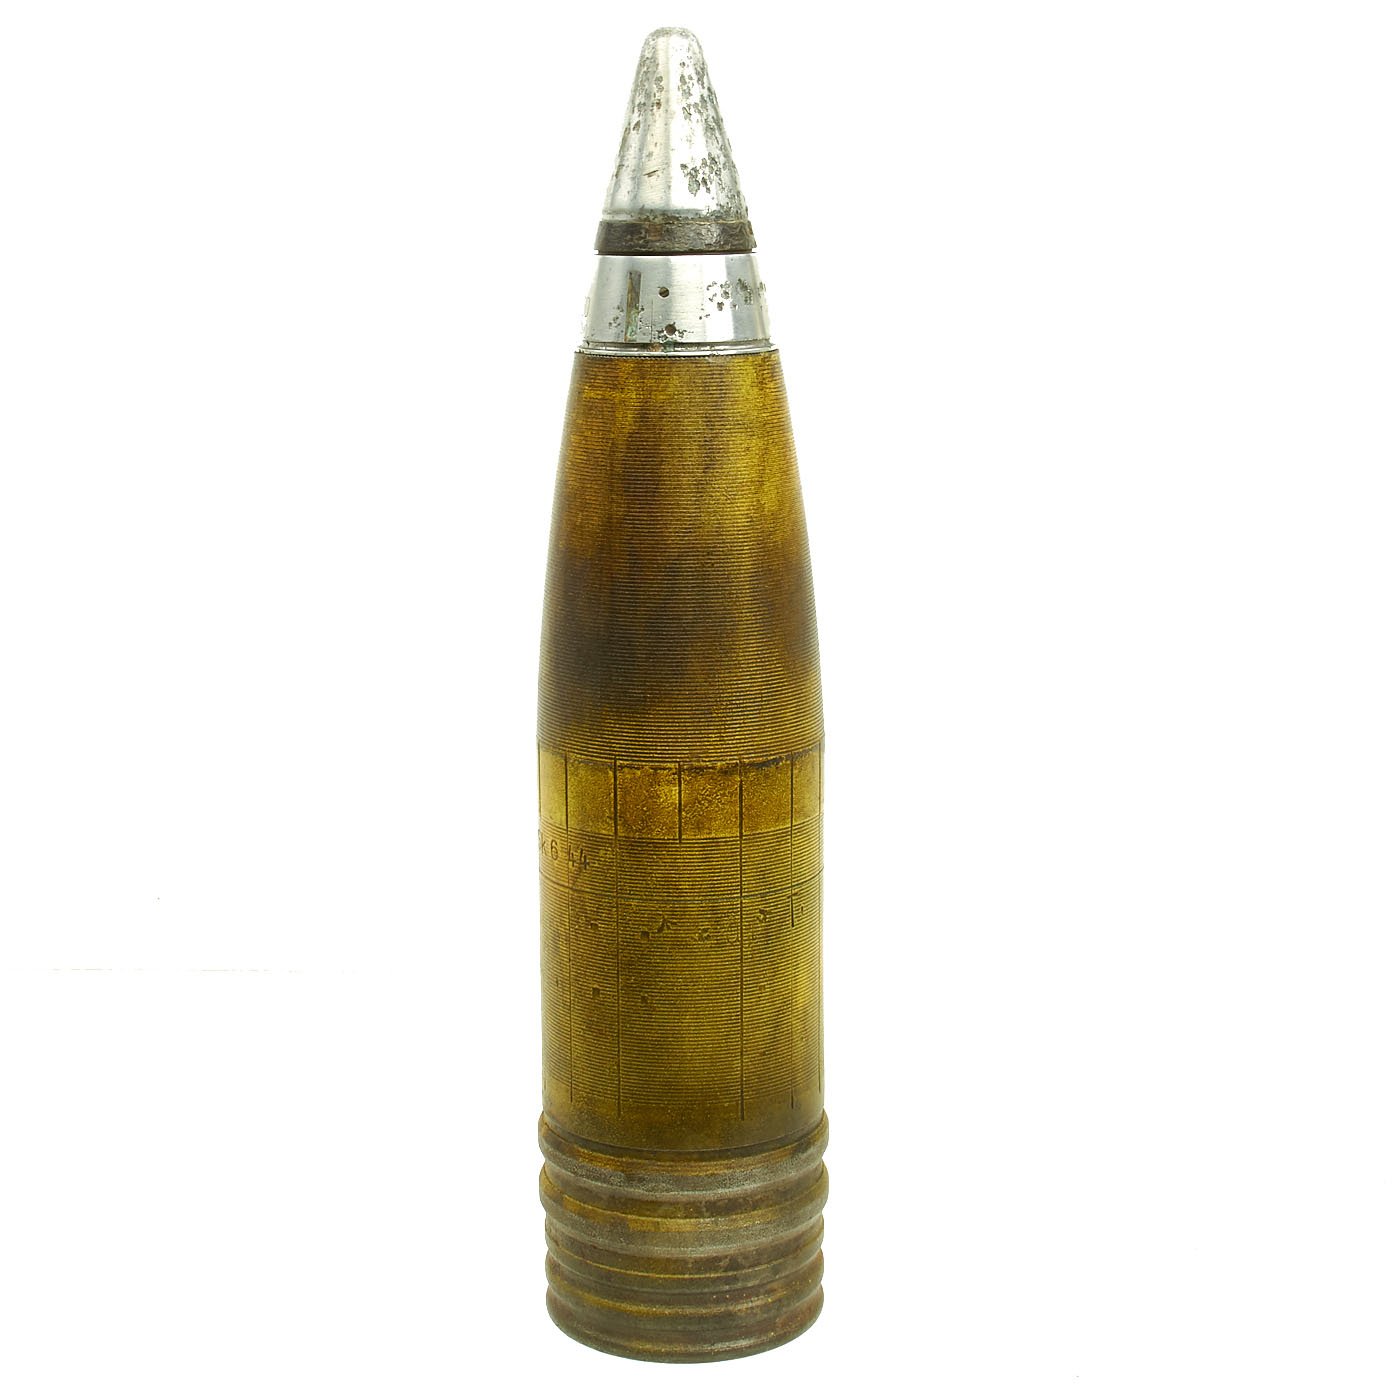 Original German Wwii Flak 88 High Explosive Inert Shell With Steel Cas